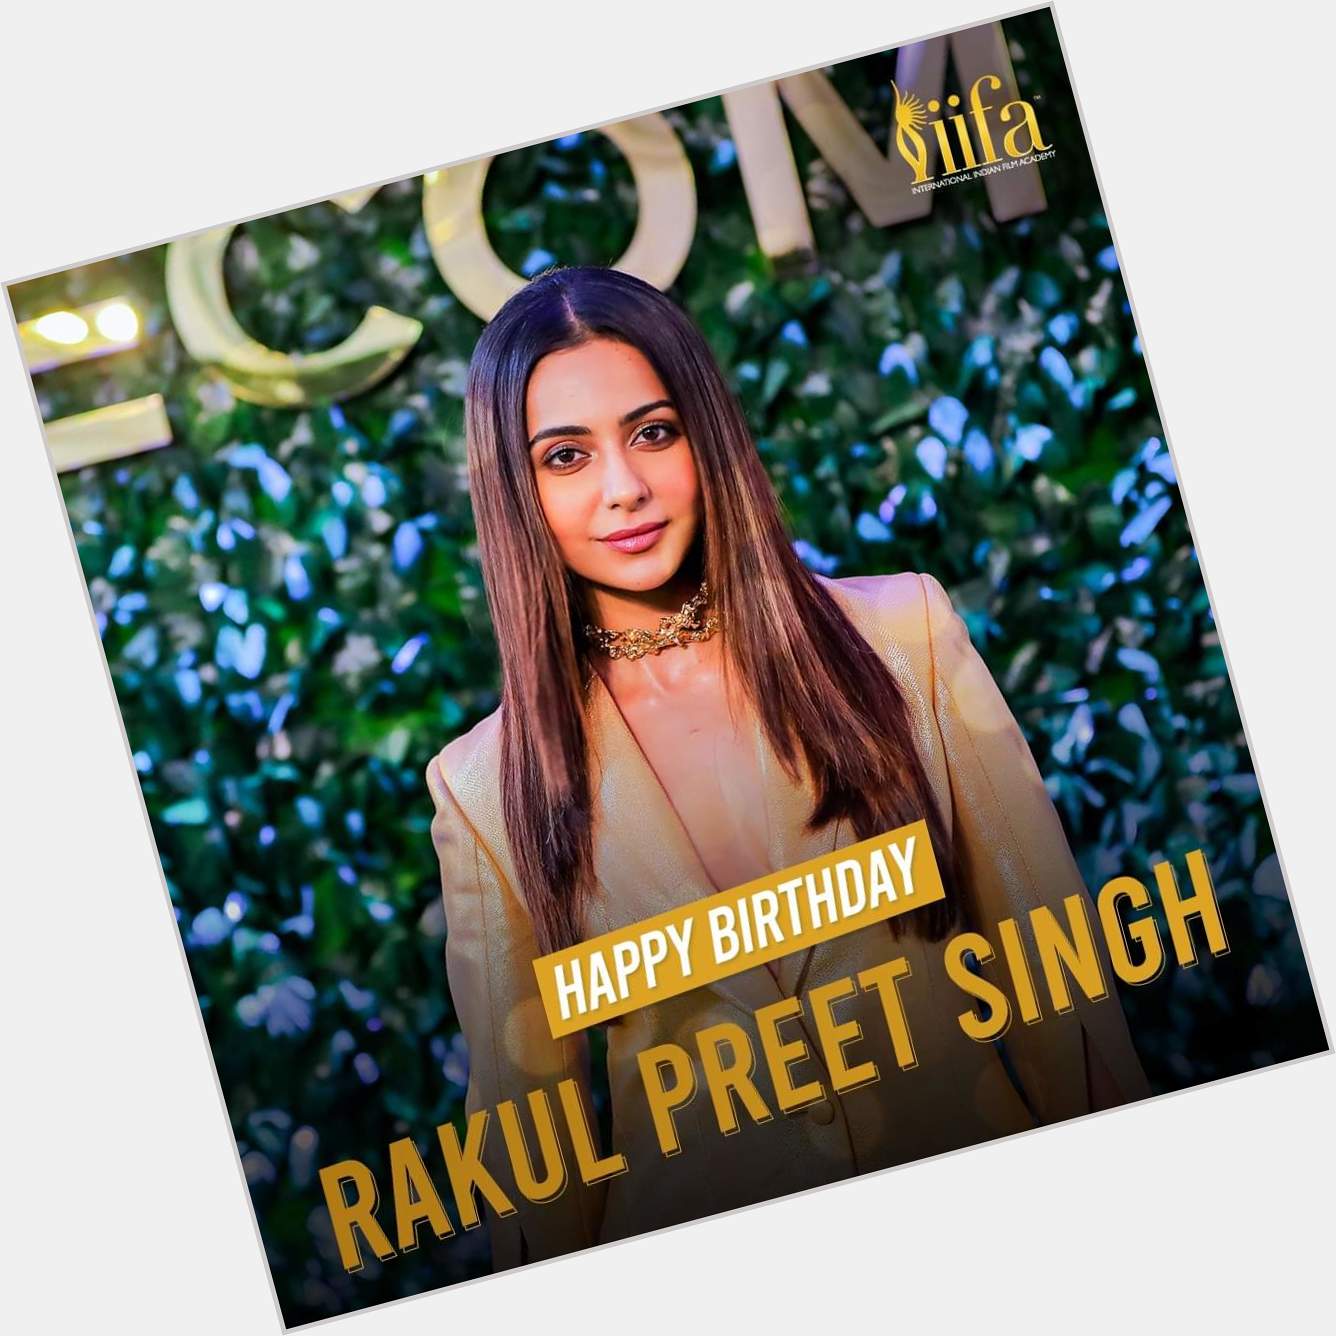 Wishing a happy birthday to stunning and gorgeous Rakul preet singh. 